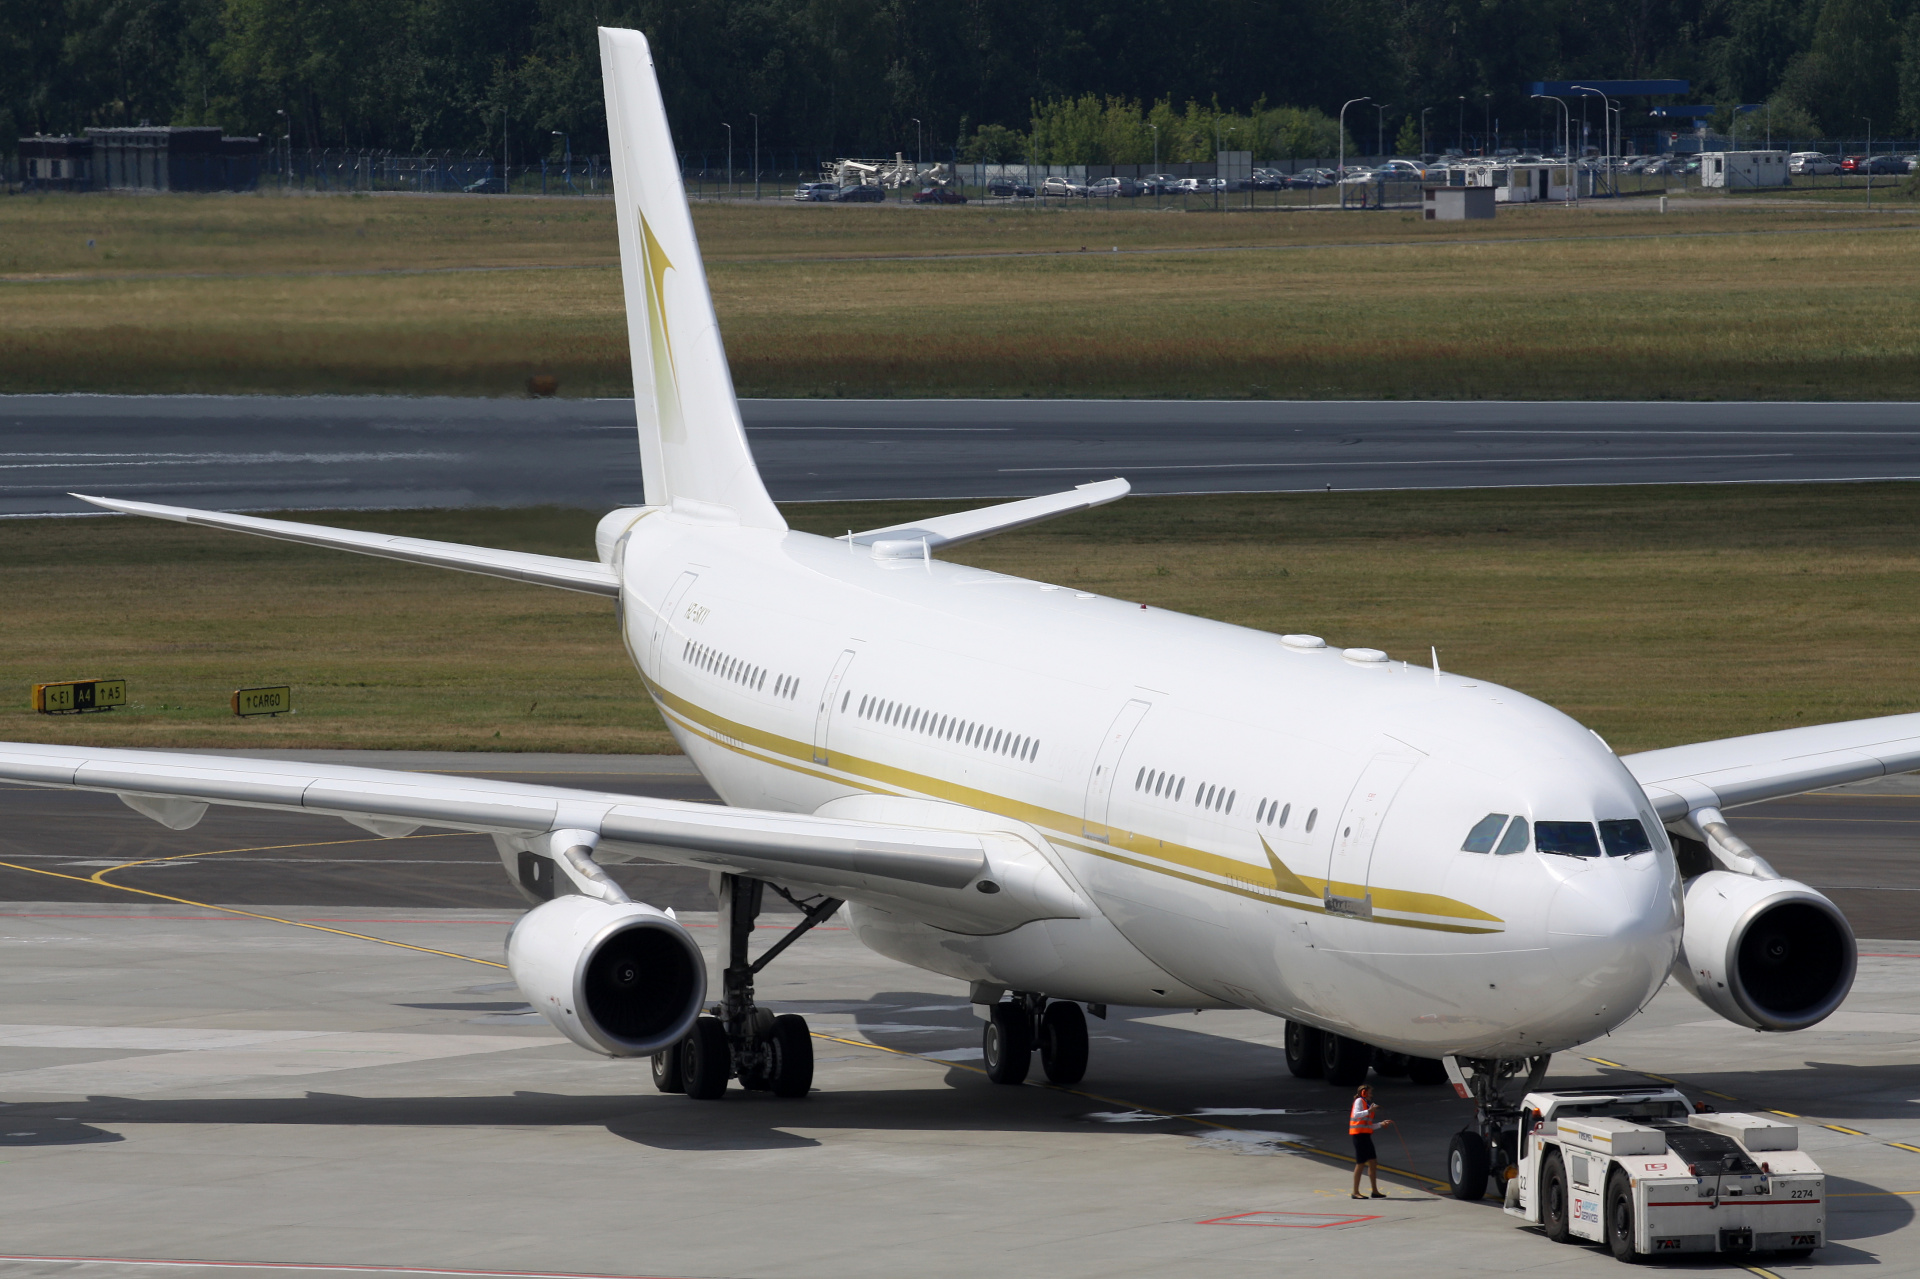 HZ-SKY1, Sky Prime Aviation Services (Aircraft » EPWA Spotting » Airbus A340-200)